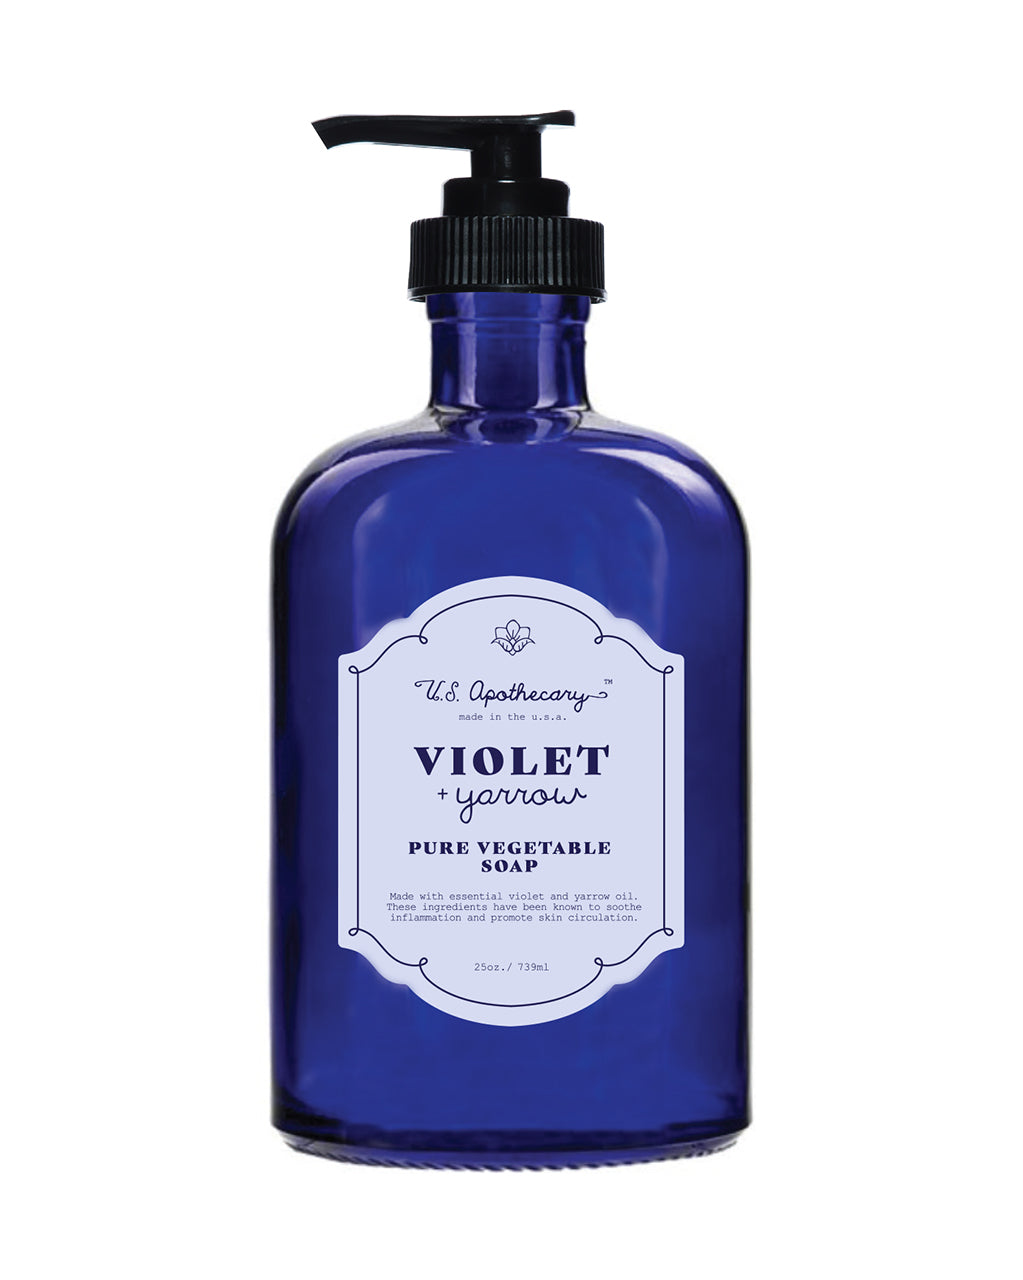 U.S. Apothecary Violet + Yarrow Liquid Soap